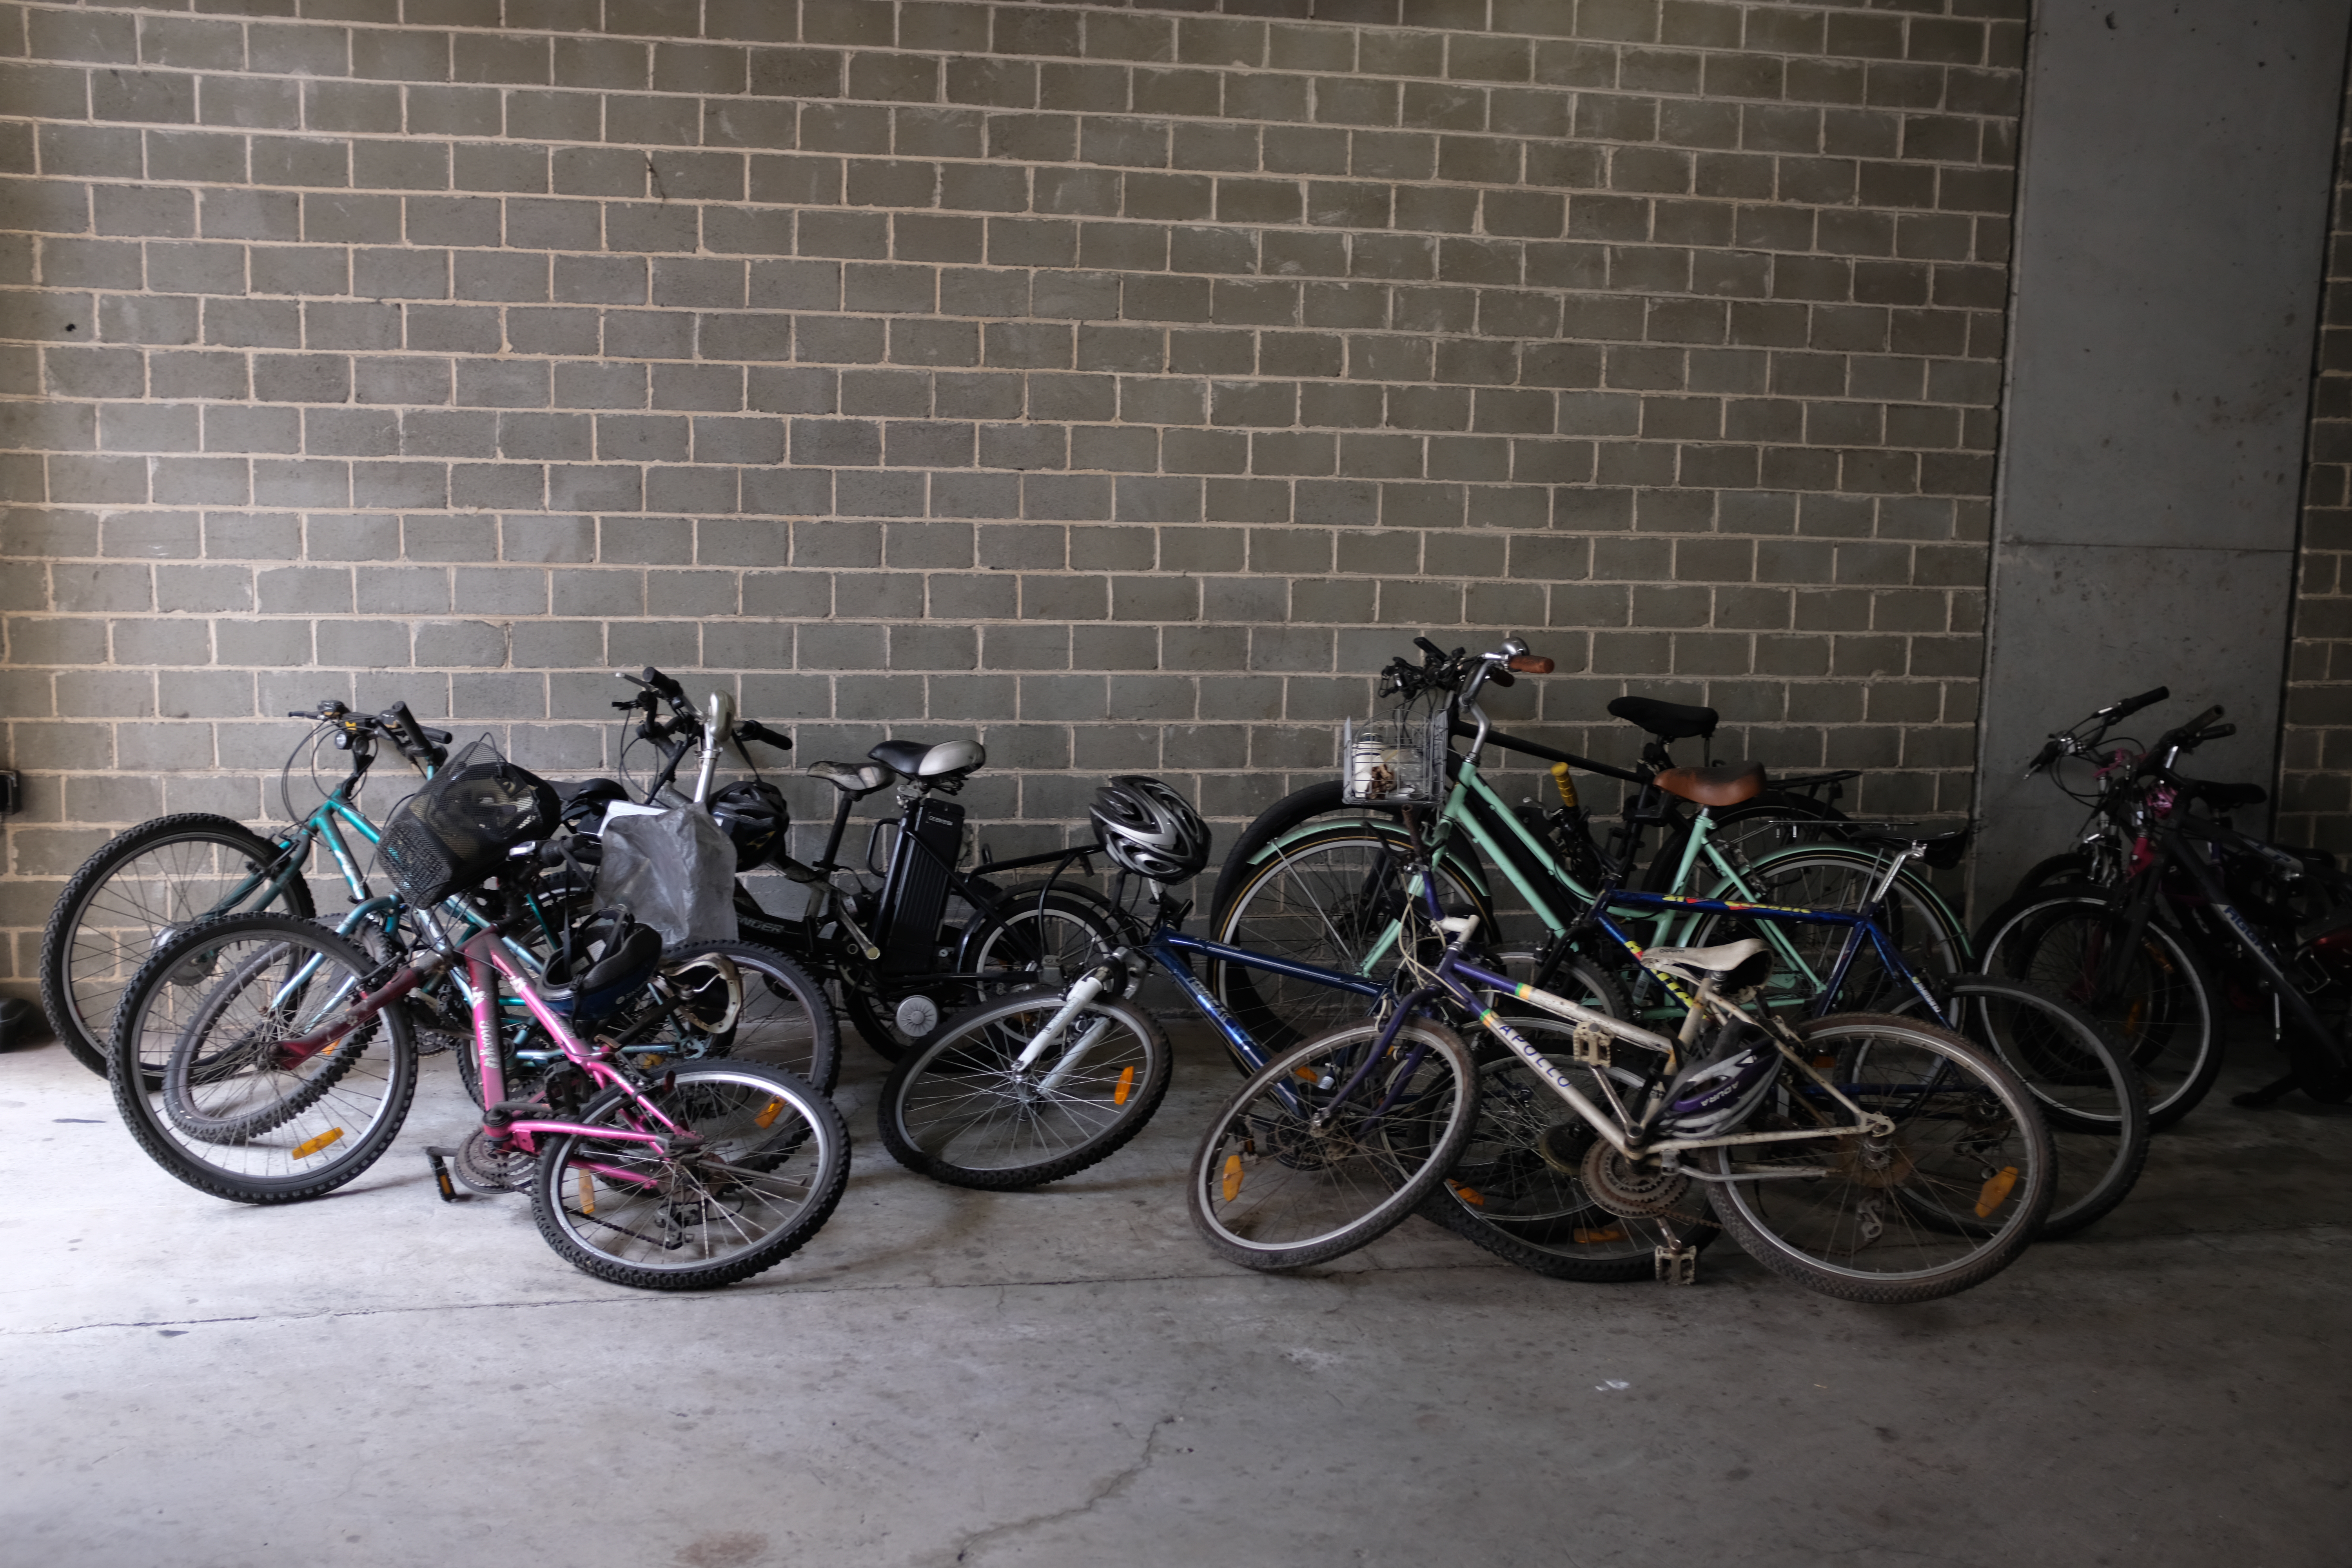 Abandoned bikes at Spring Street Apartments